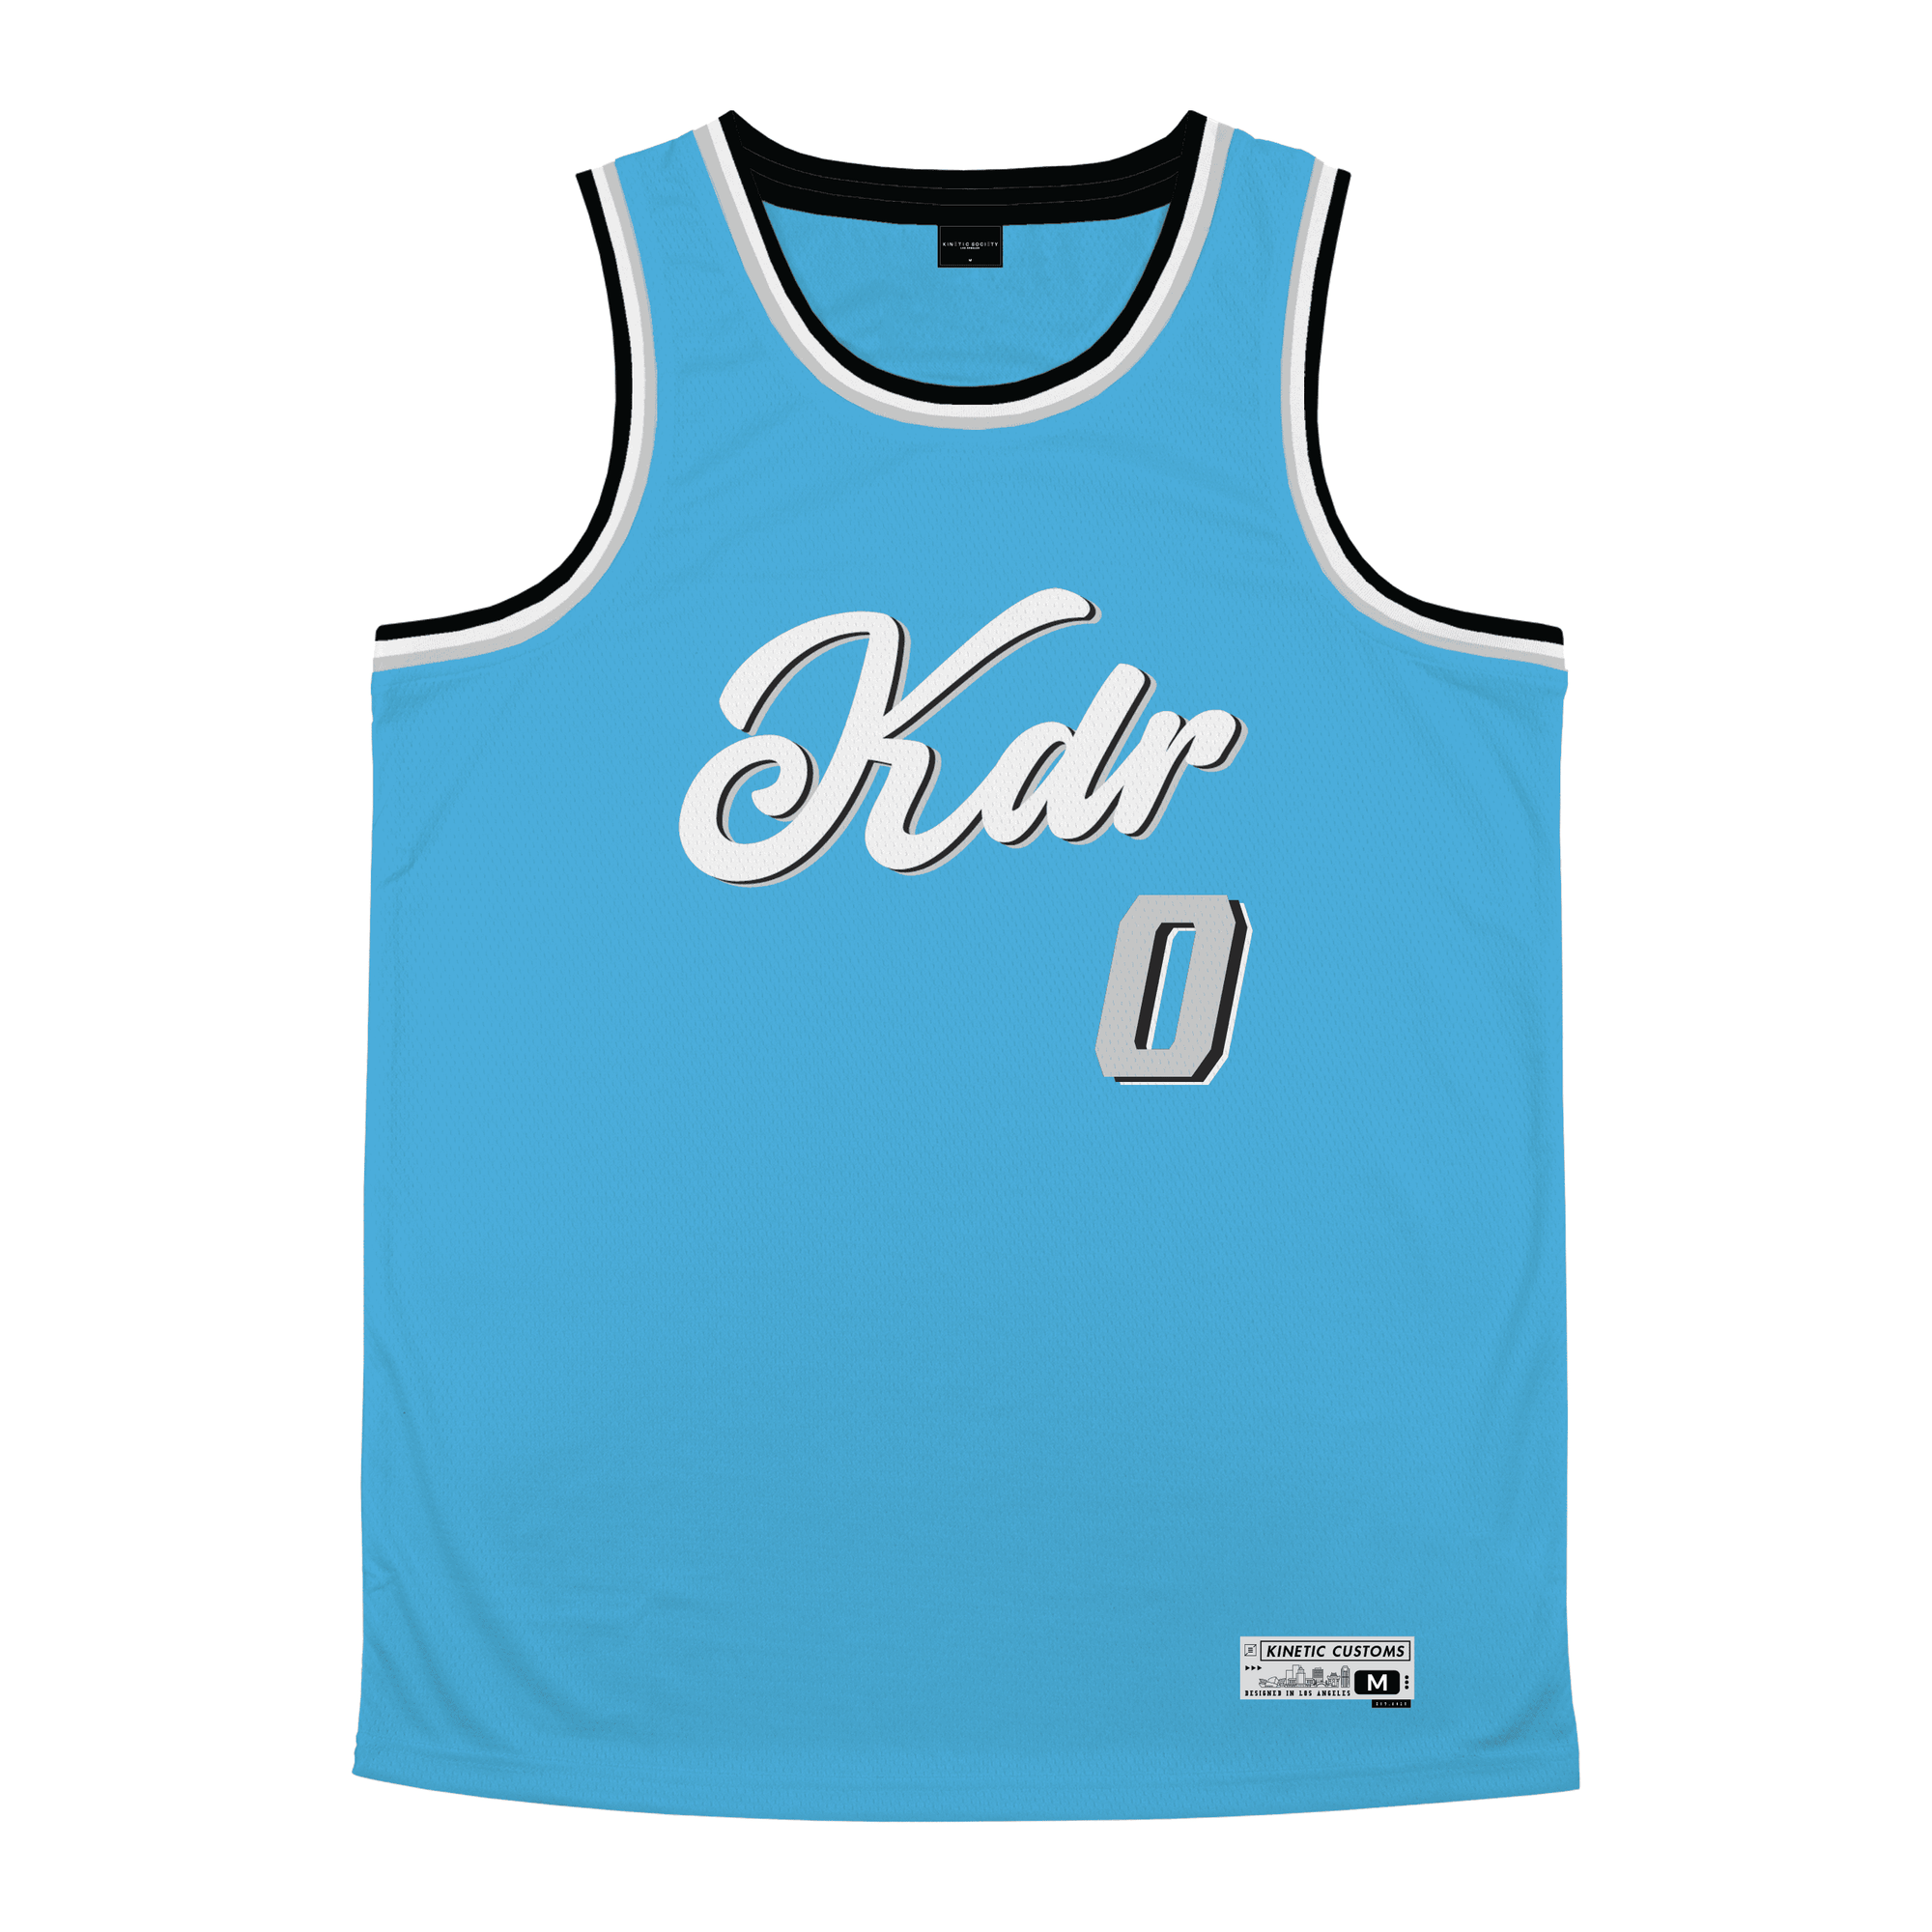 Kappa Delta Rho - Pacific Mist Basketball Jersey